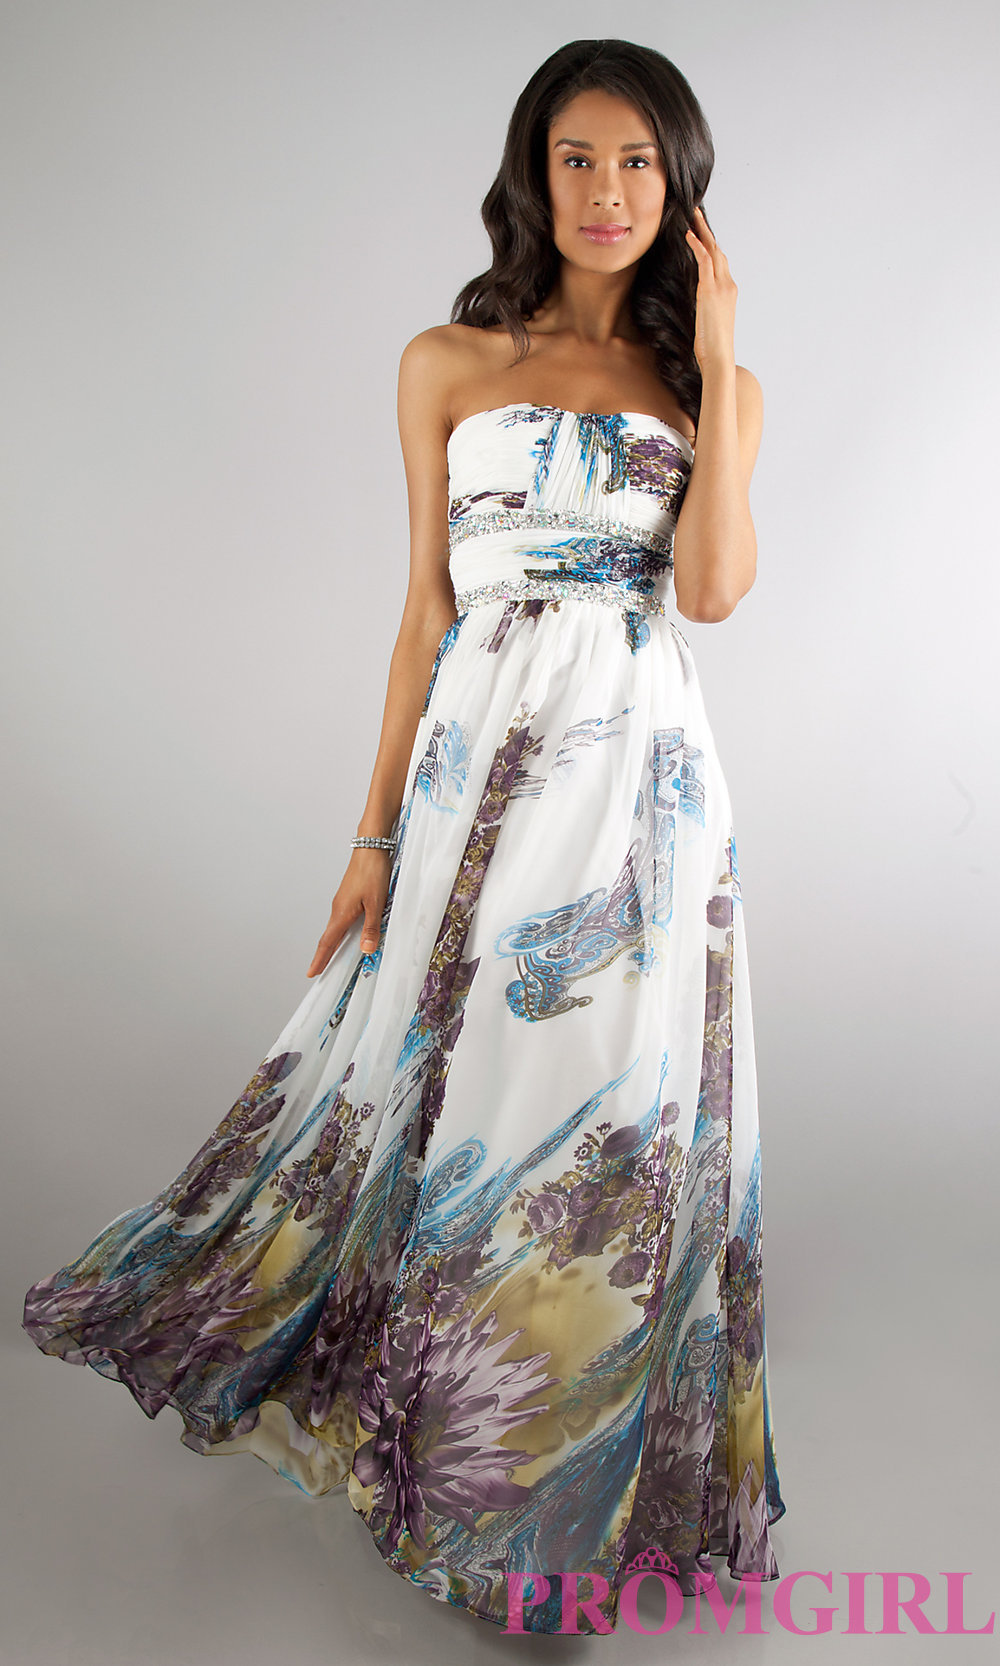 Printed Floor Length Dresses : Make Your Evening Special